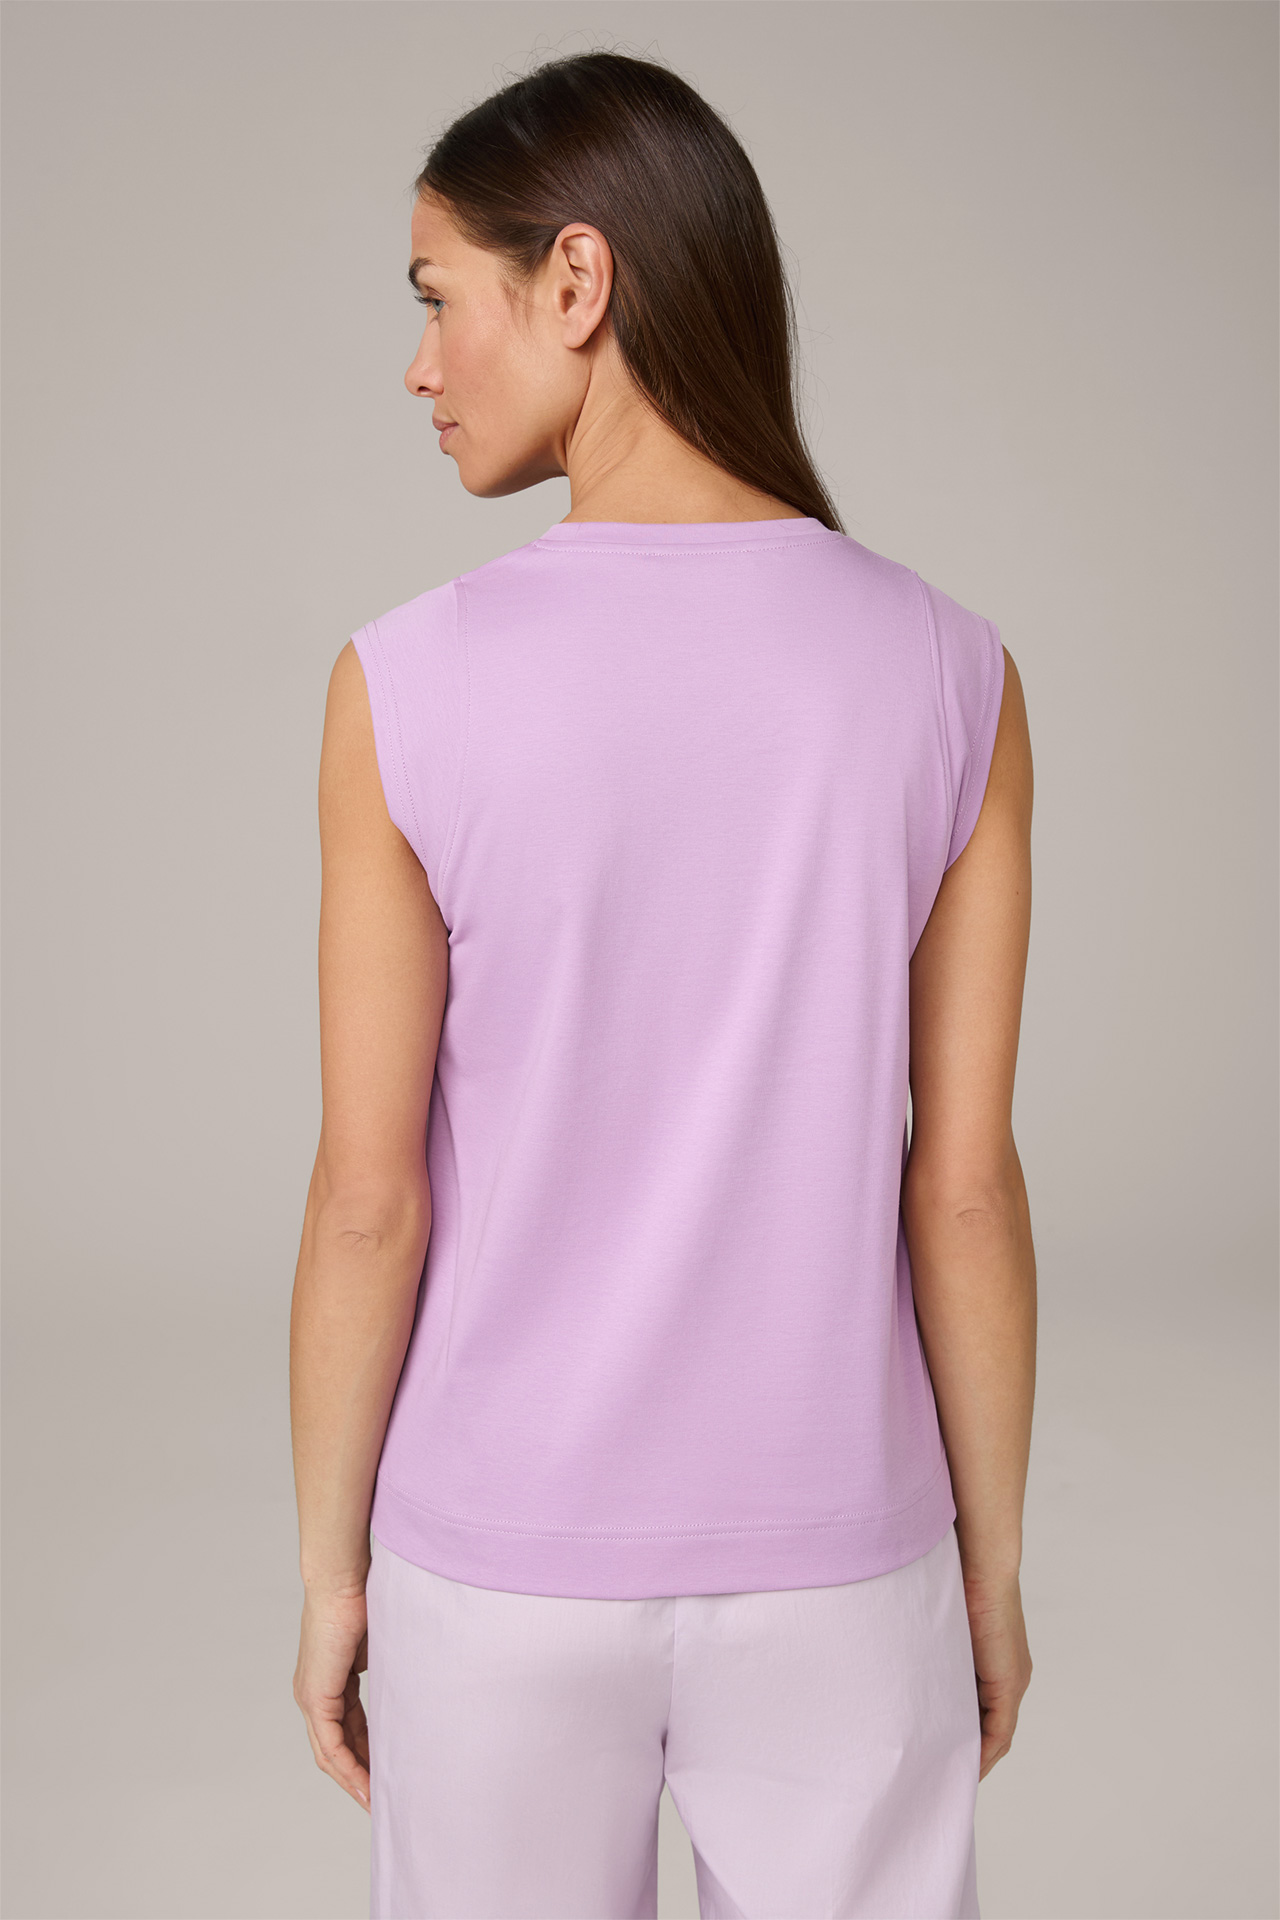 T-shirt en coton interlock à mancherons, en lilas